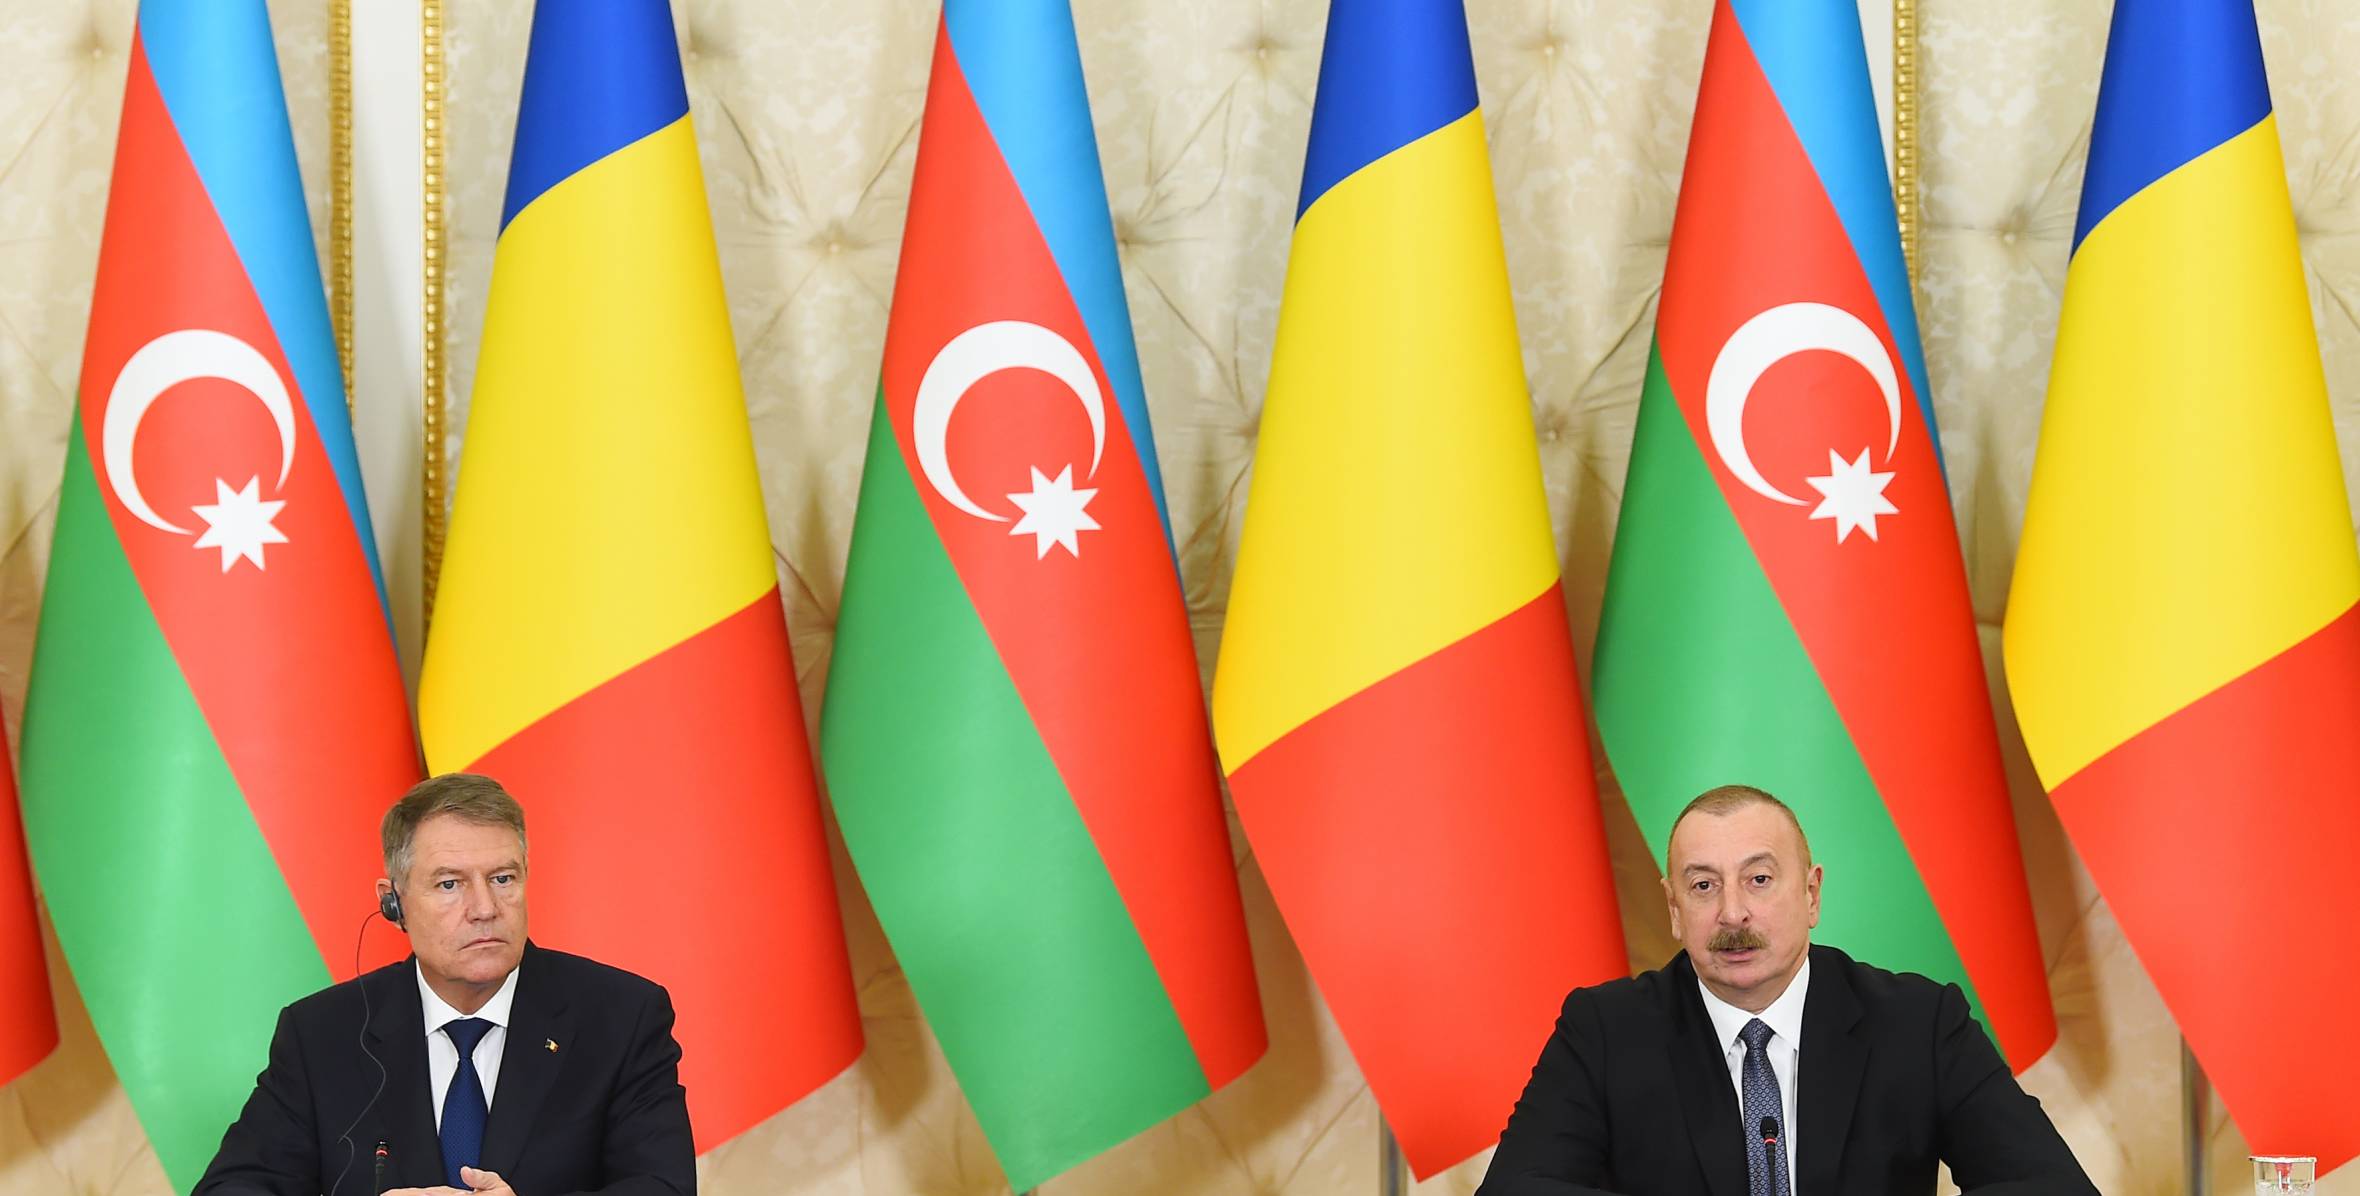 Presidents of Azerbaijan and Romania made press statements